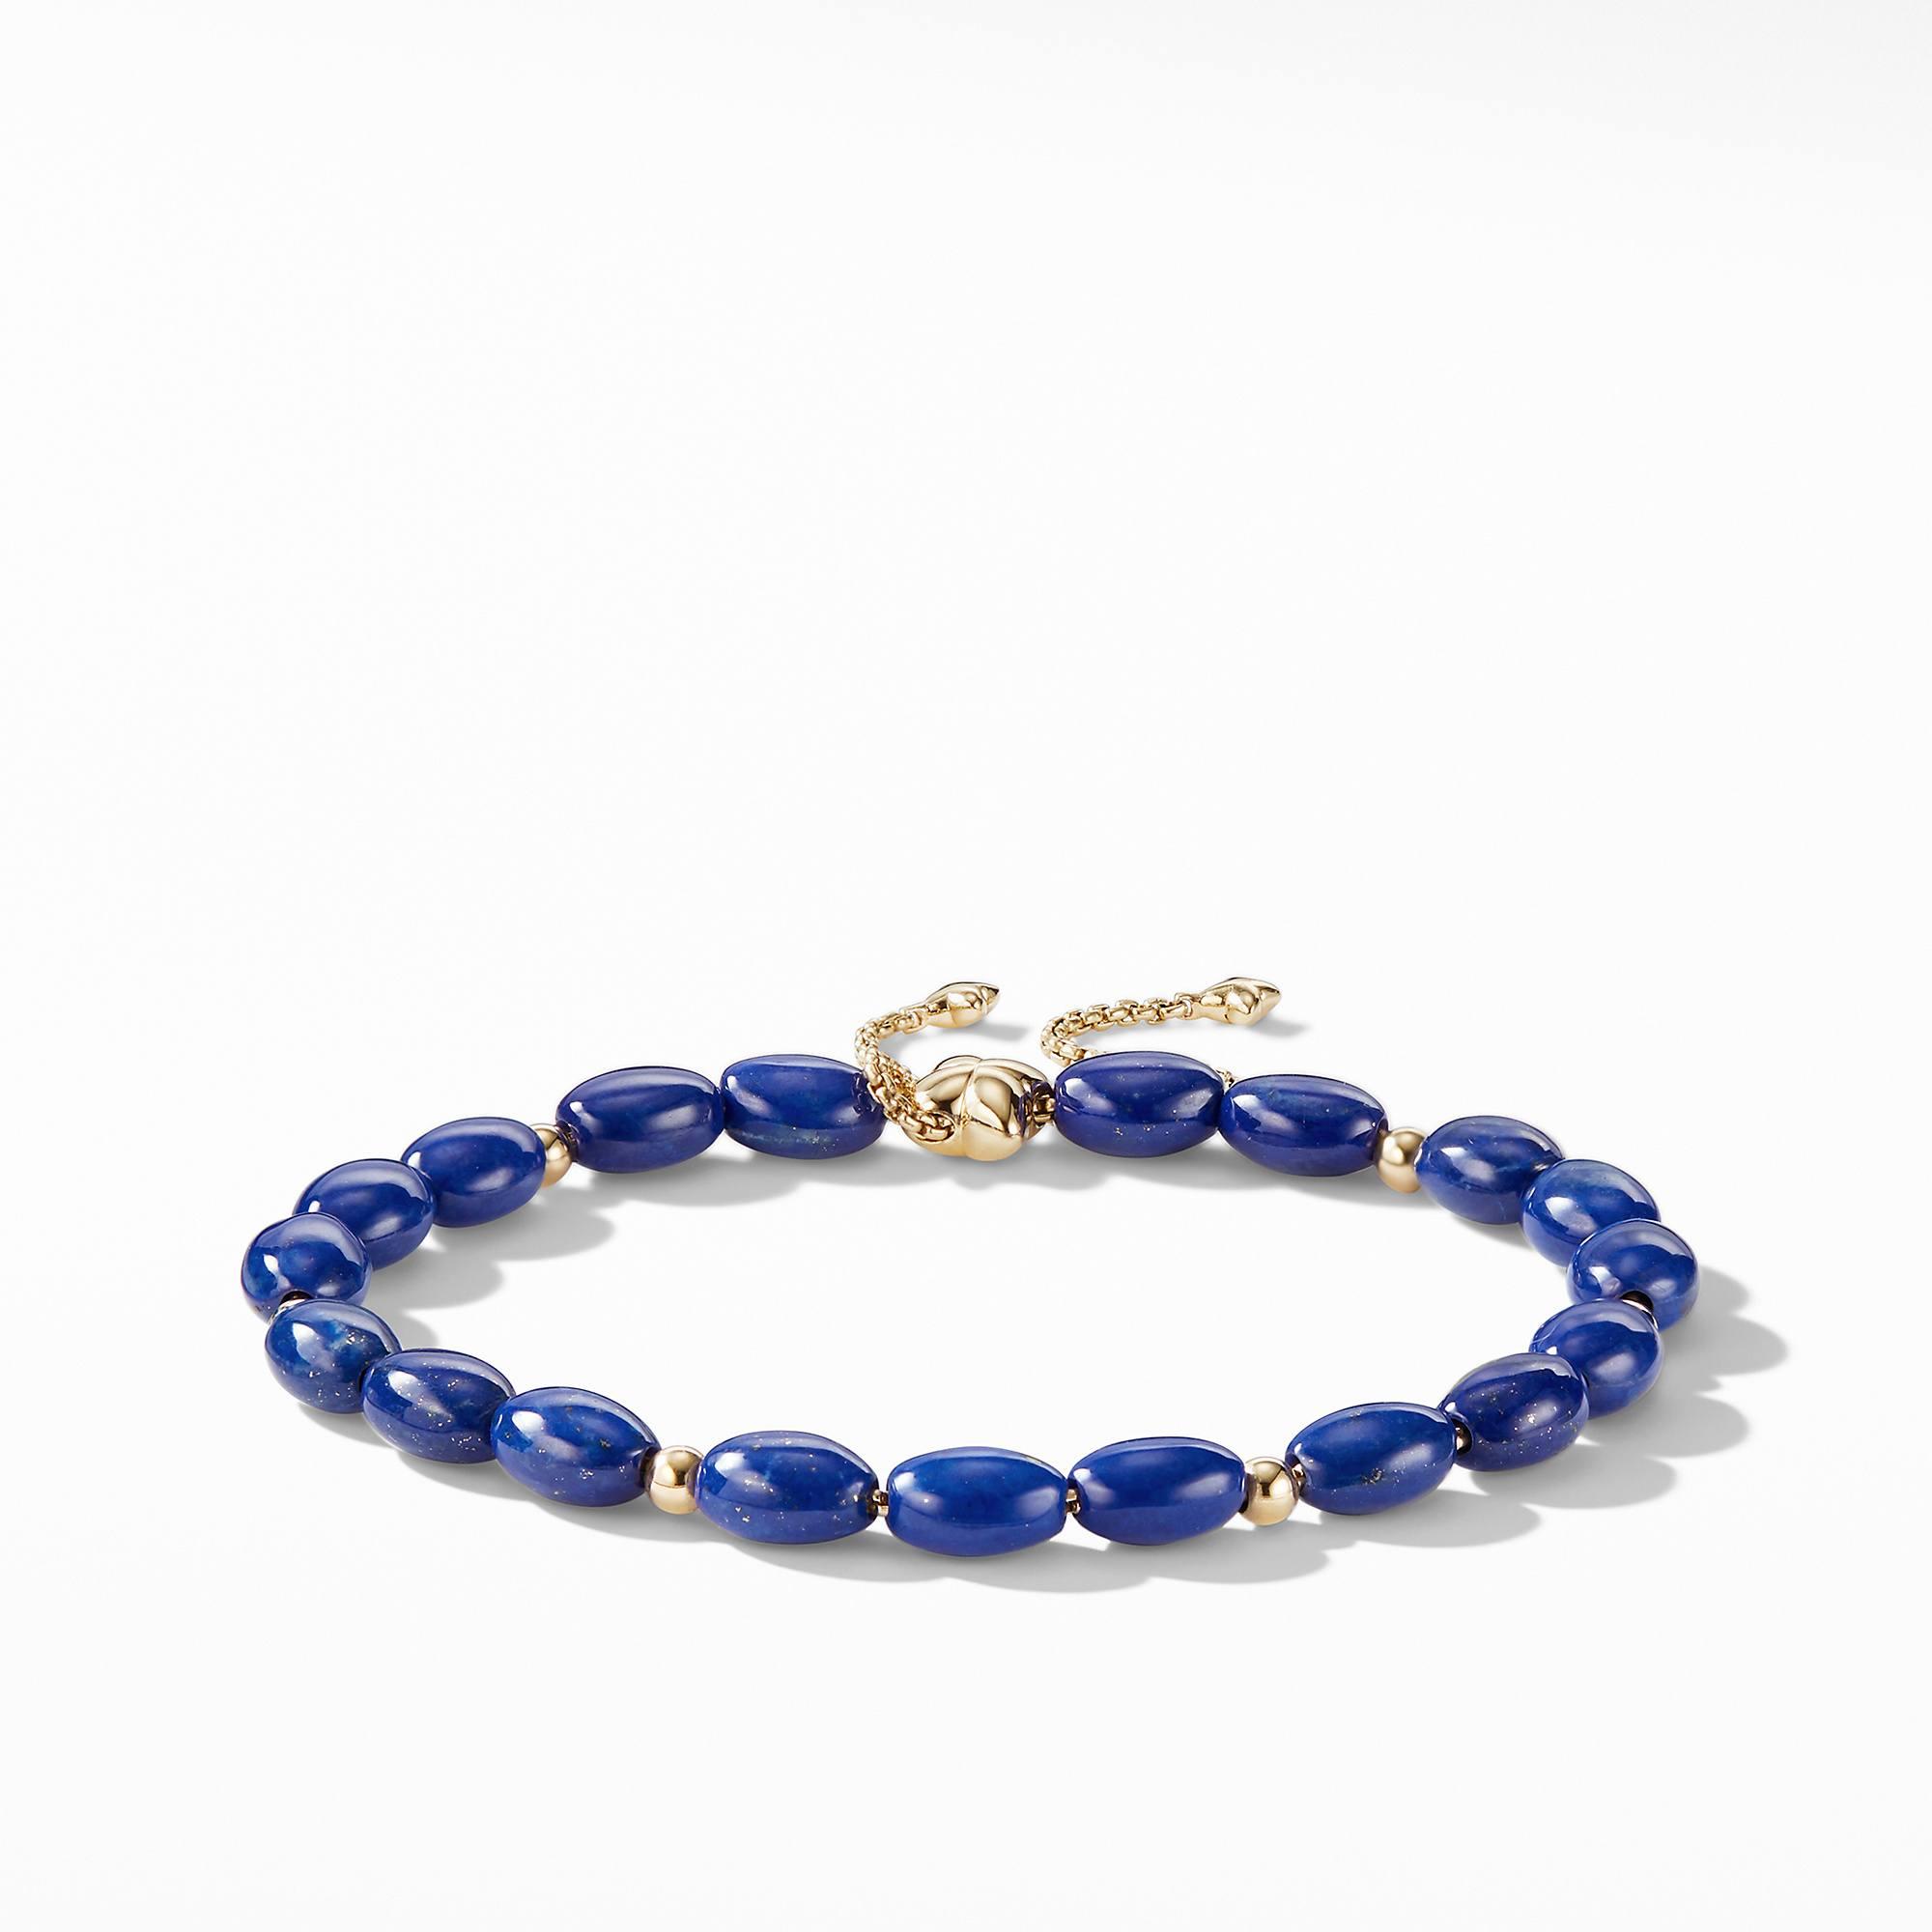 David Yurman Bijoux Beaded Bracelet with Lapis Lazuli